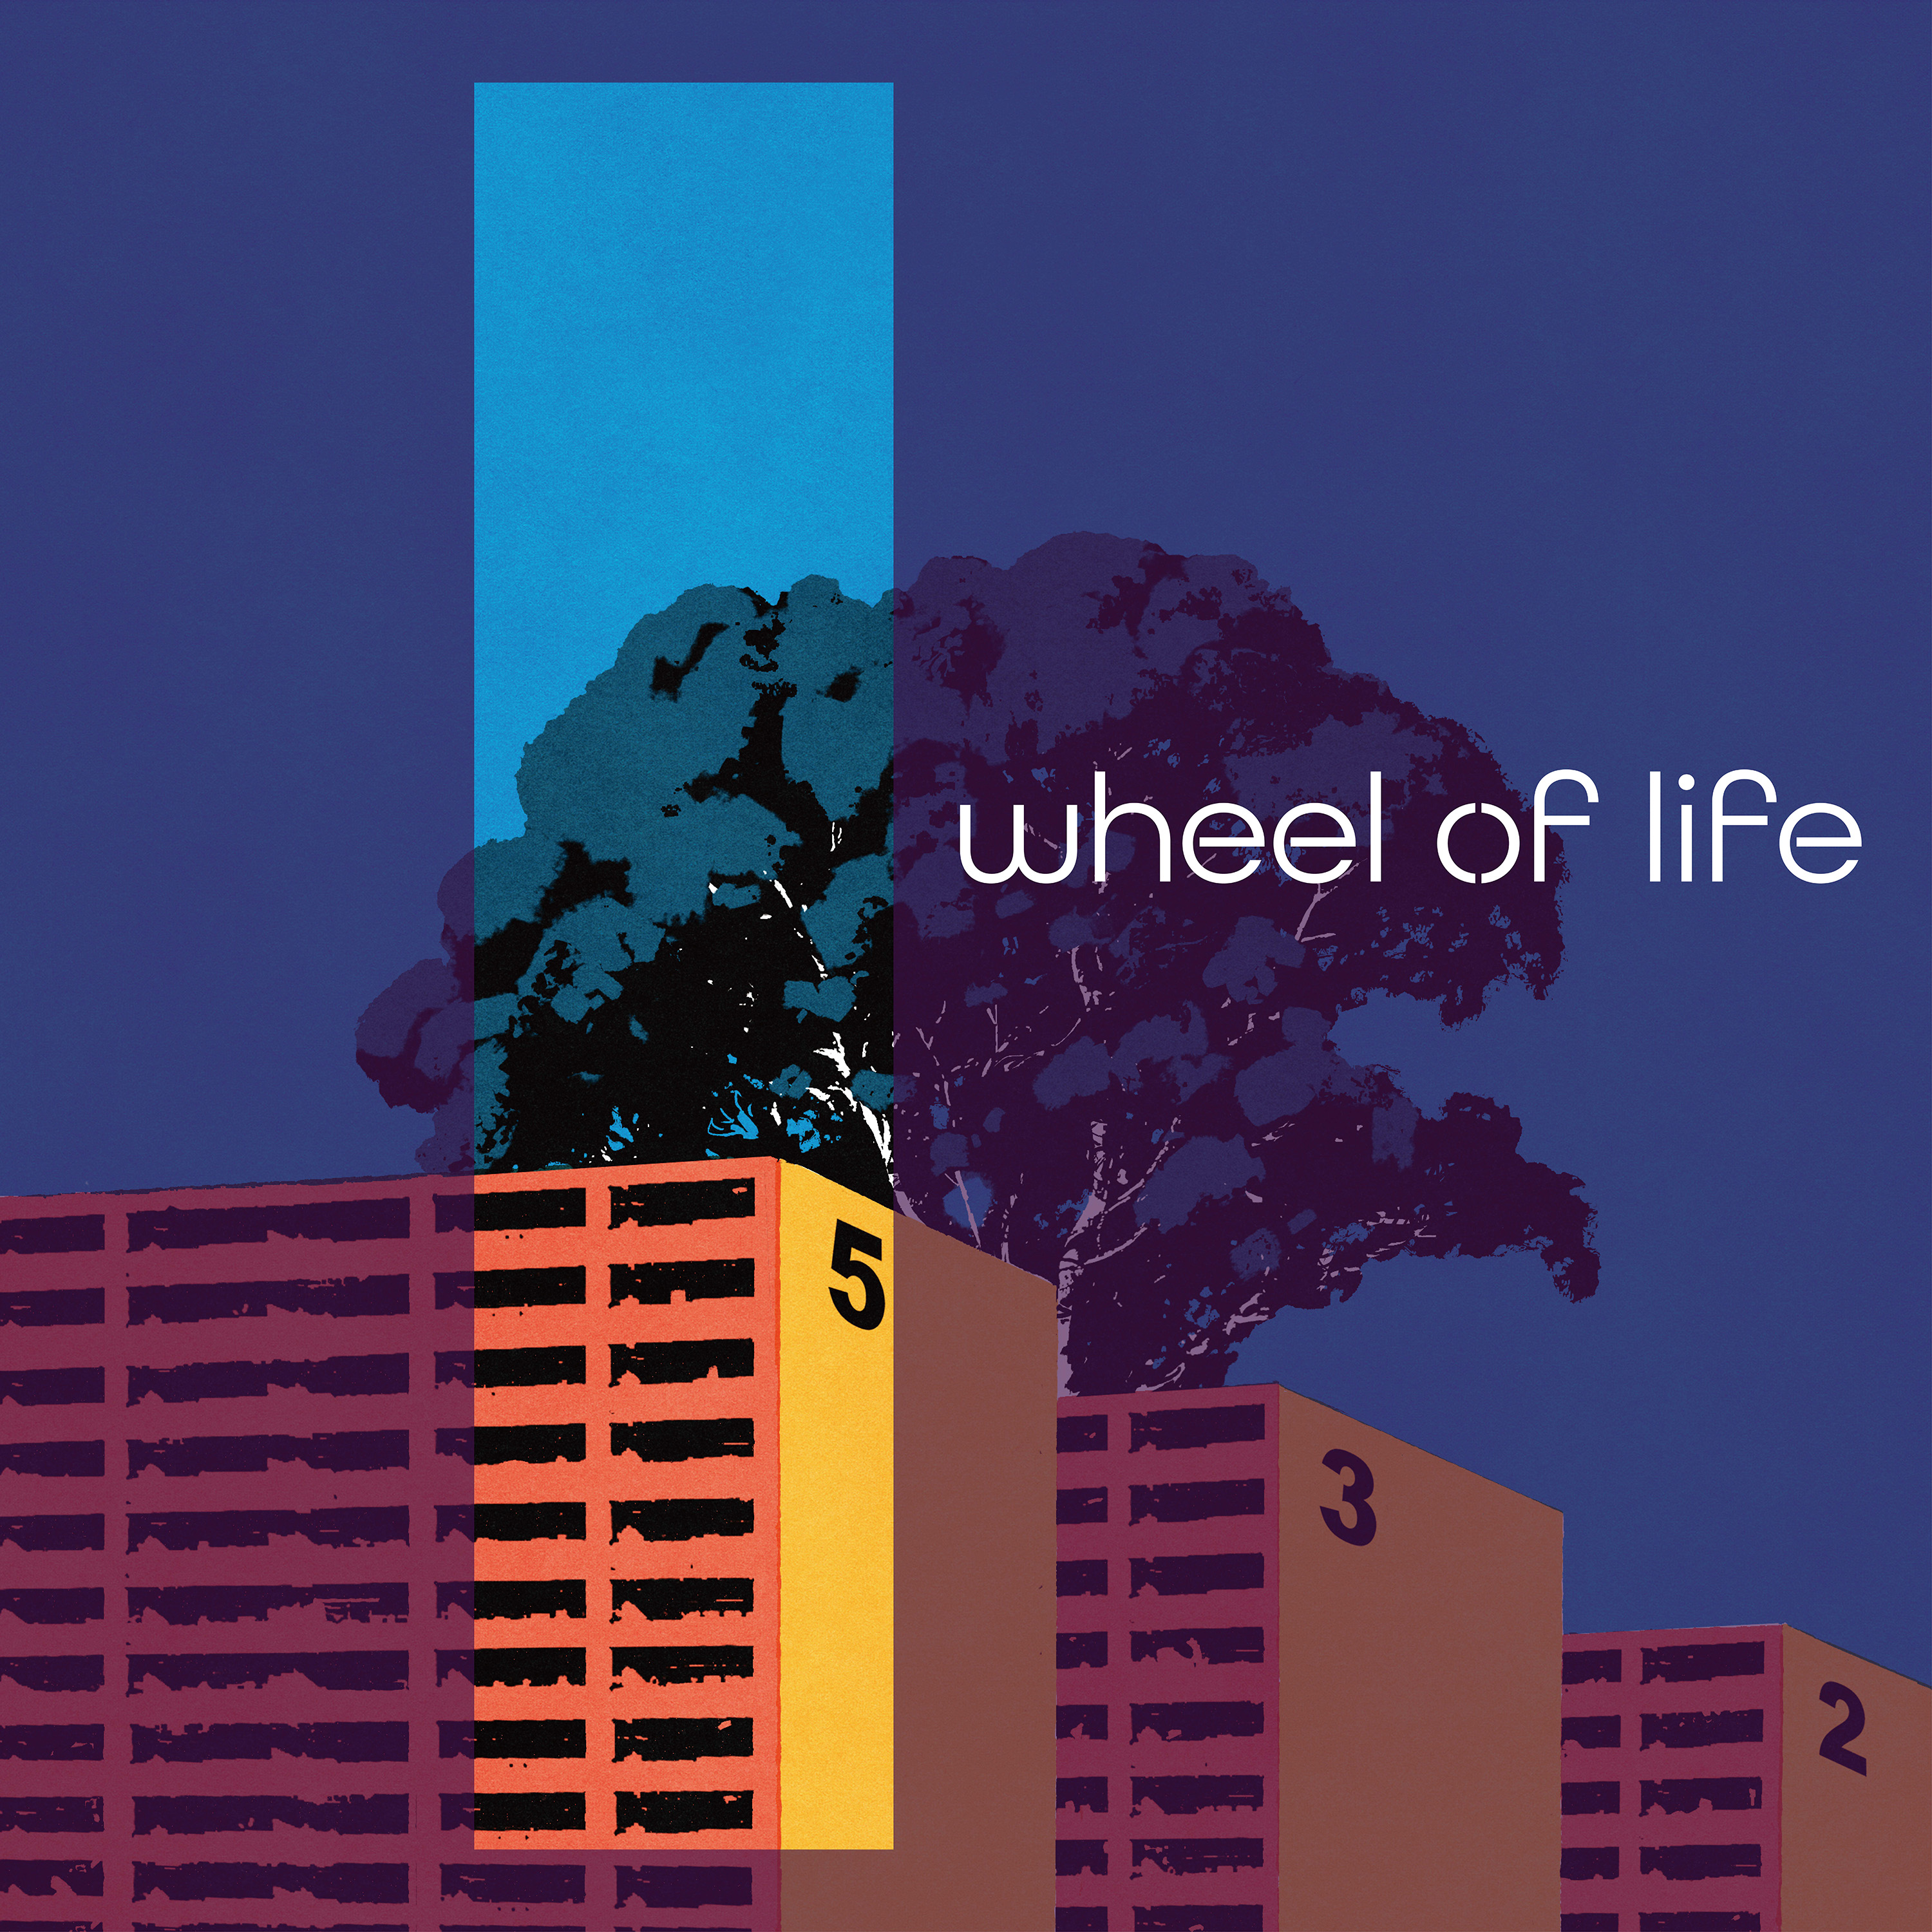 wheel of life